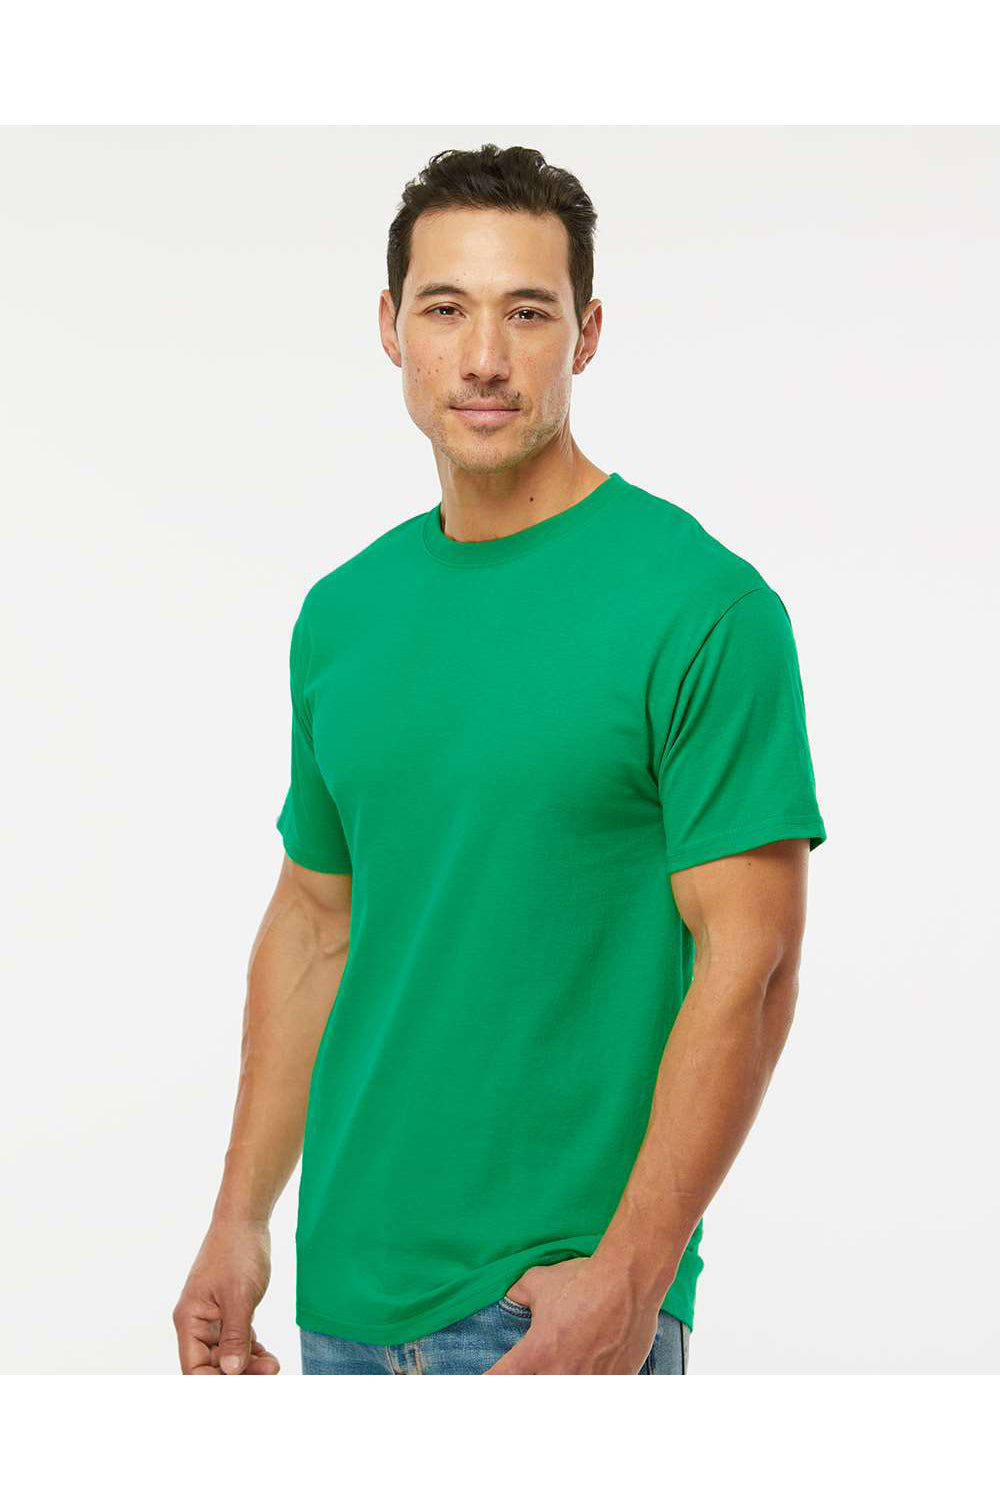 M&O 4800 Mens Gold Soft Touch Short Sleeve Crewneck T-Shirt Irish Green Model Side